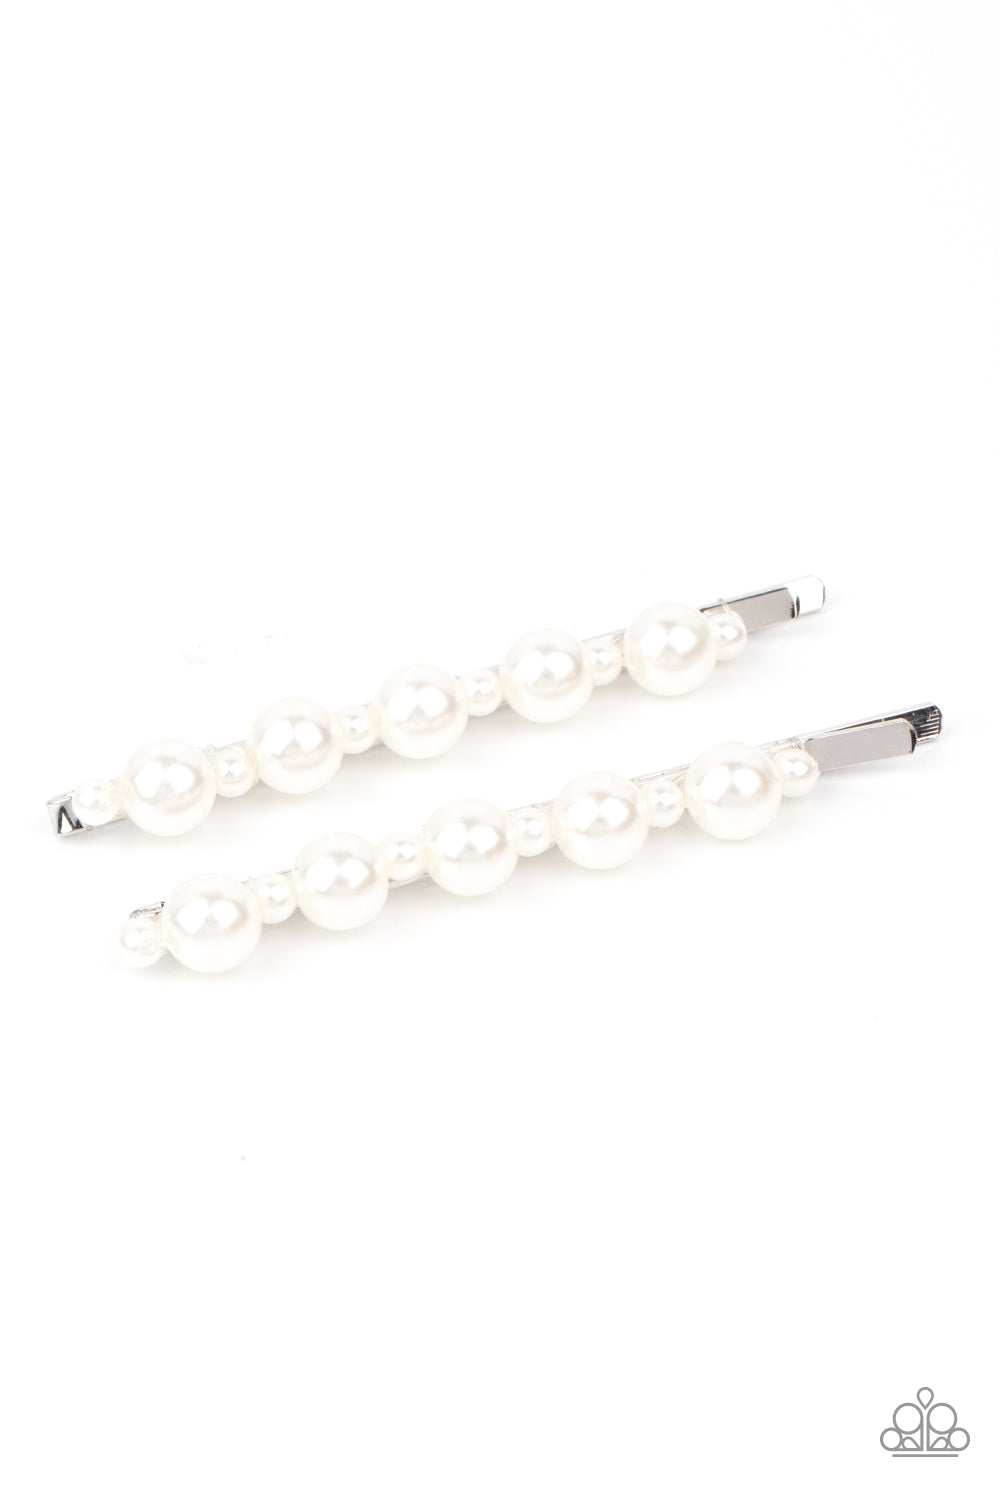 Put A Pin In It - White Pearl Hair Pin - Princess Glam Shop